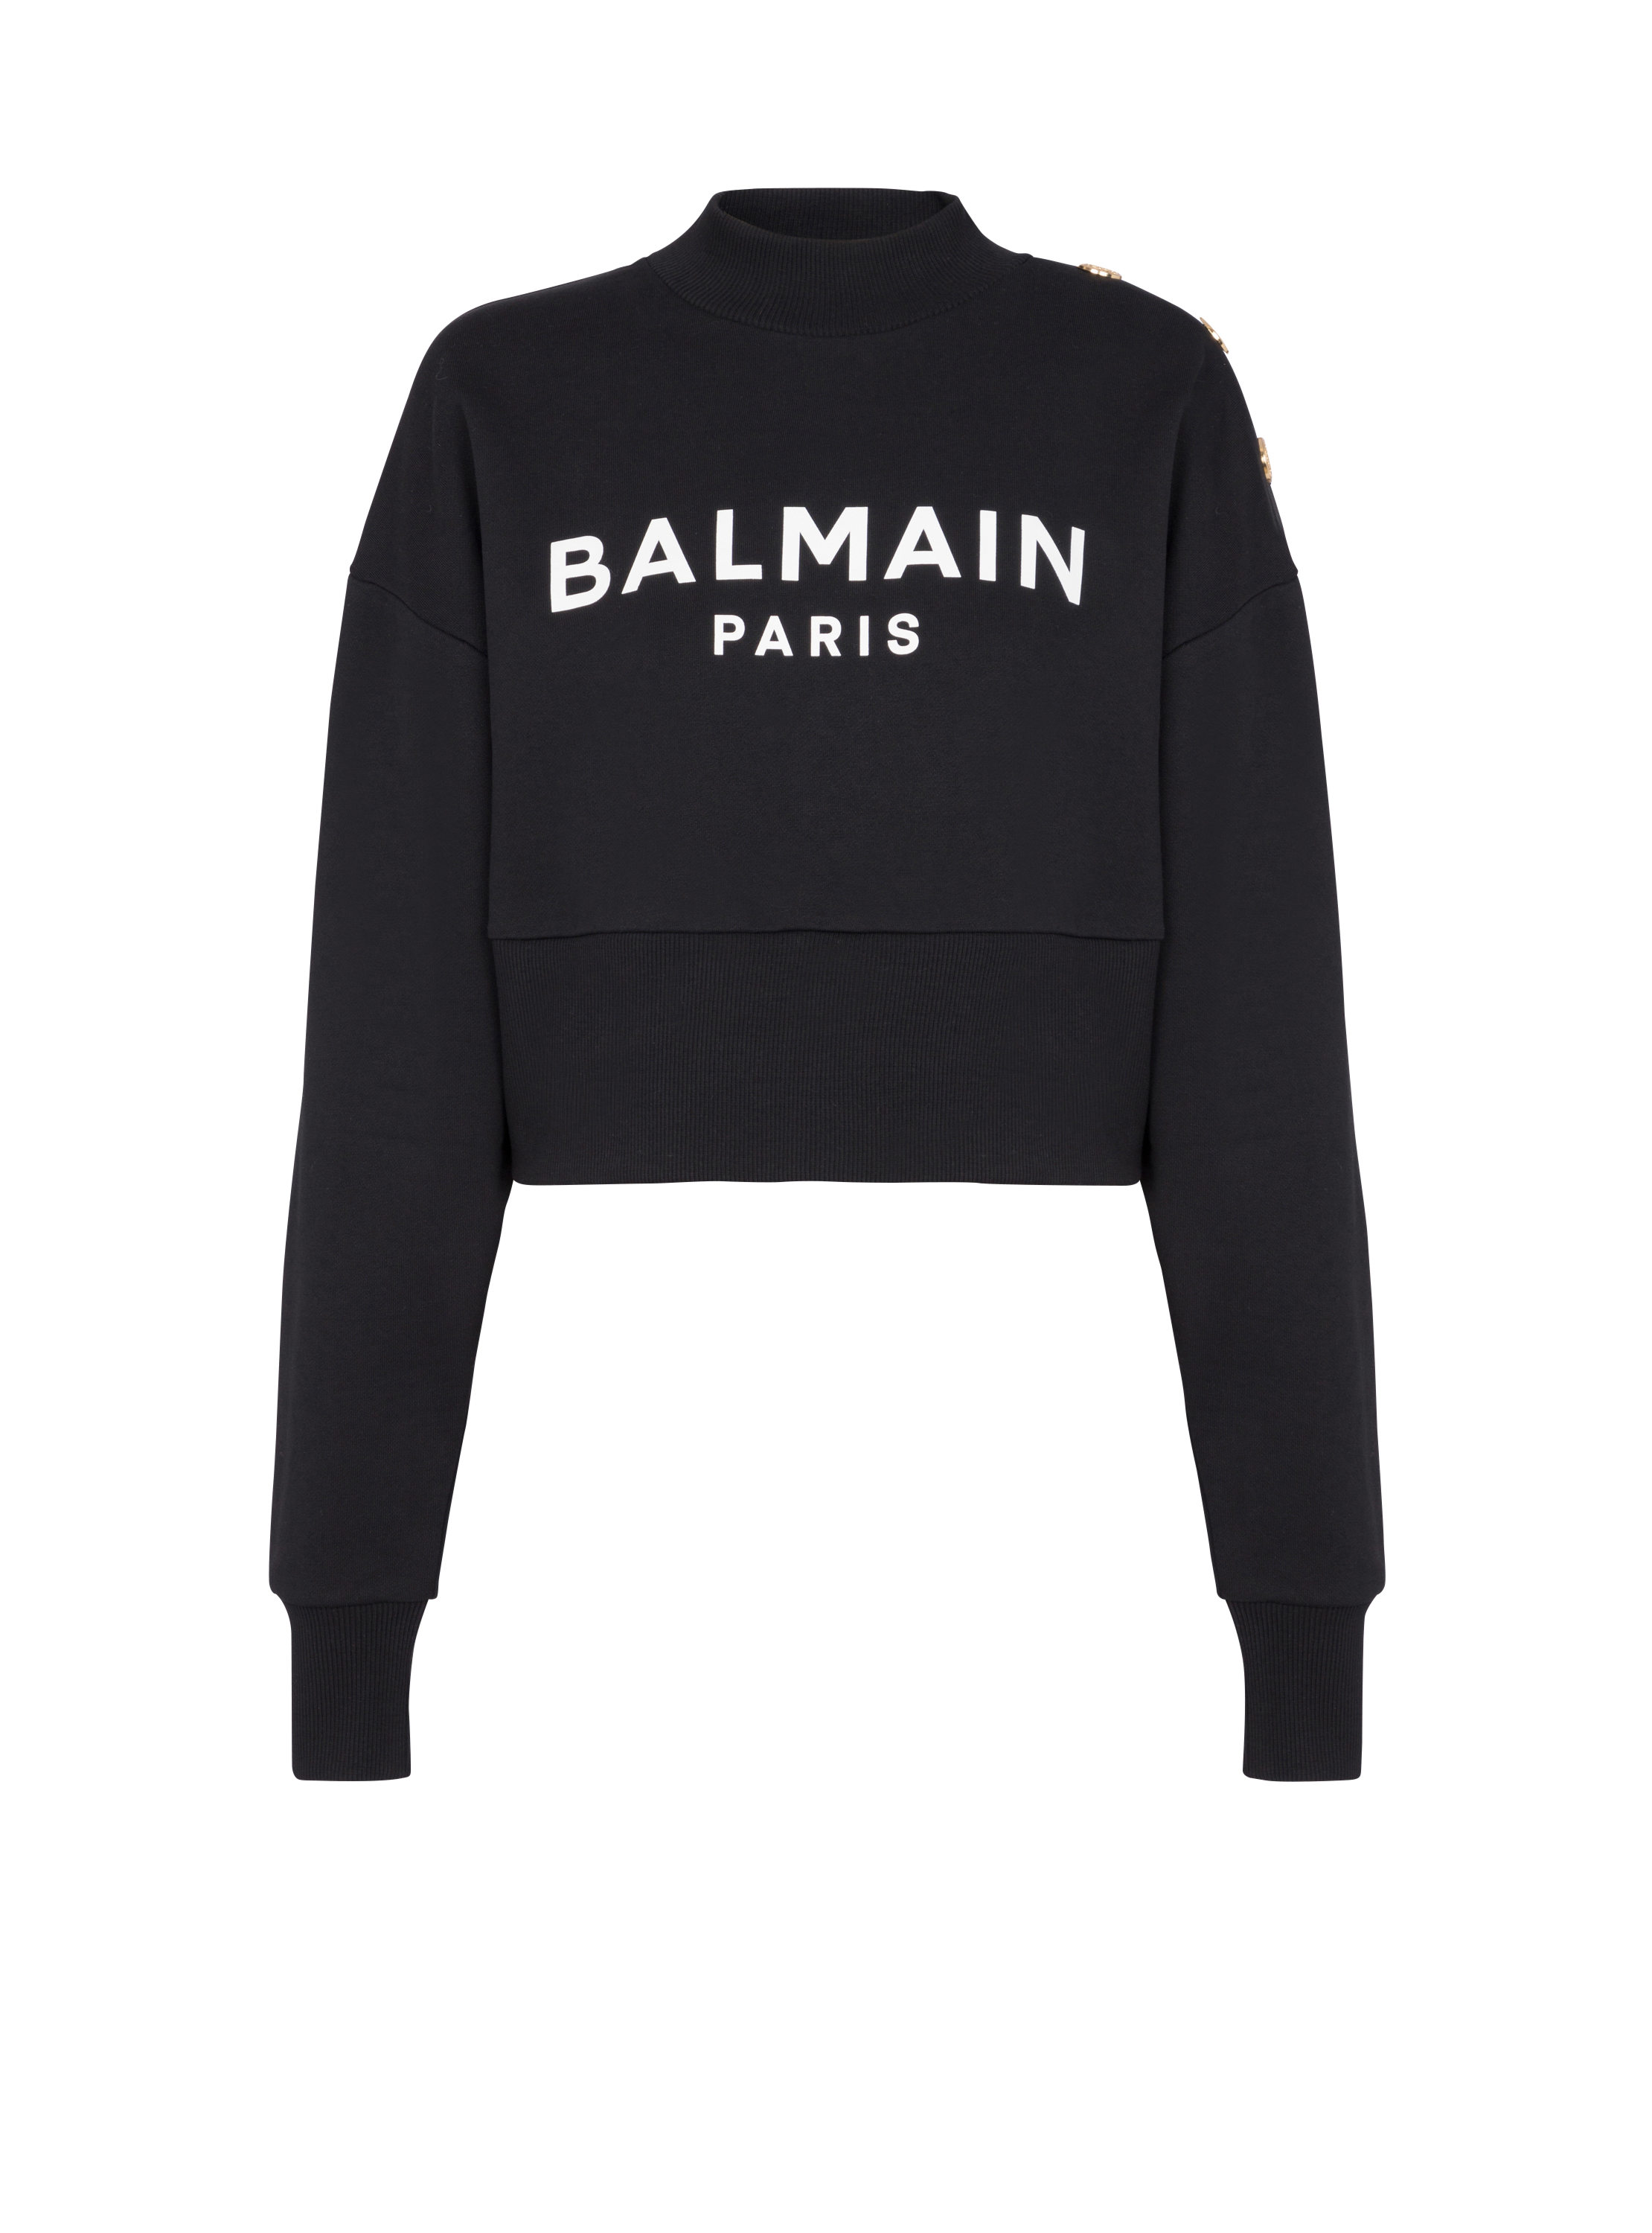 Balmain巴尔曼标志印花短款环保设计棉质运动衫